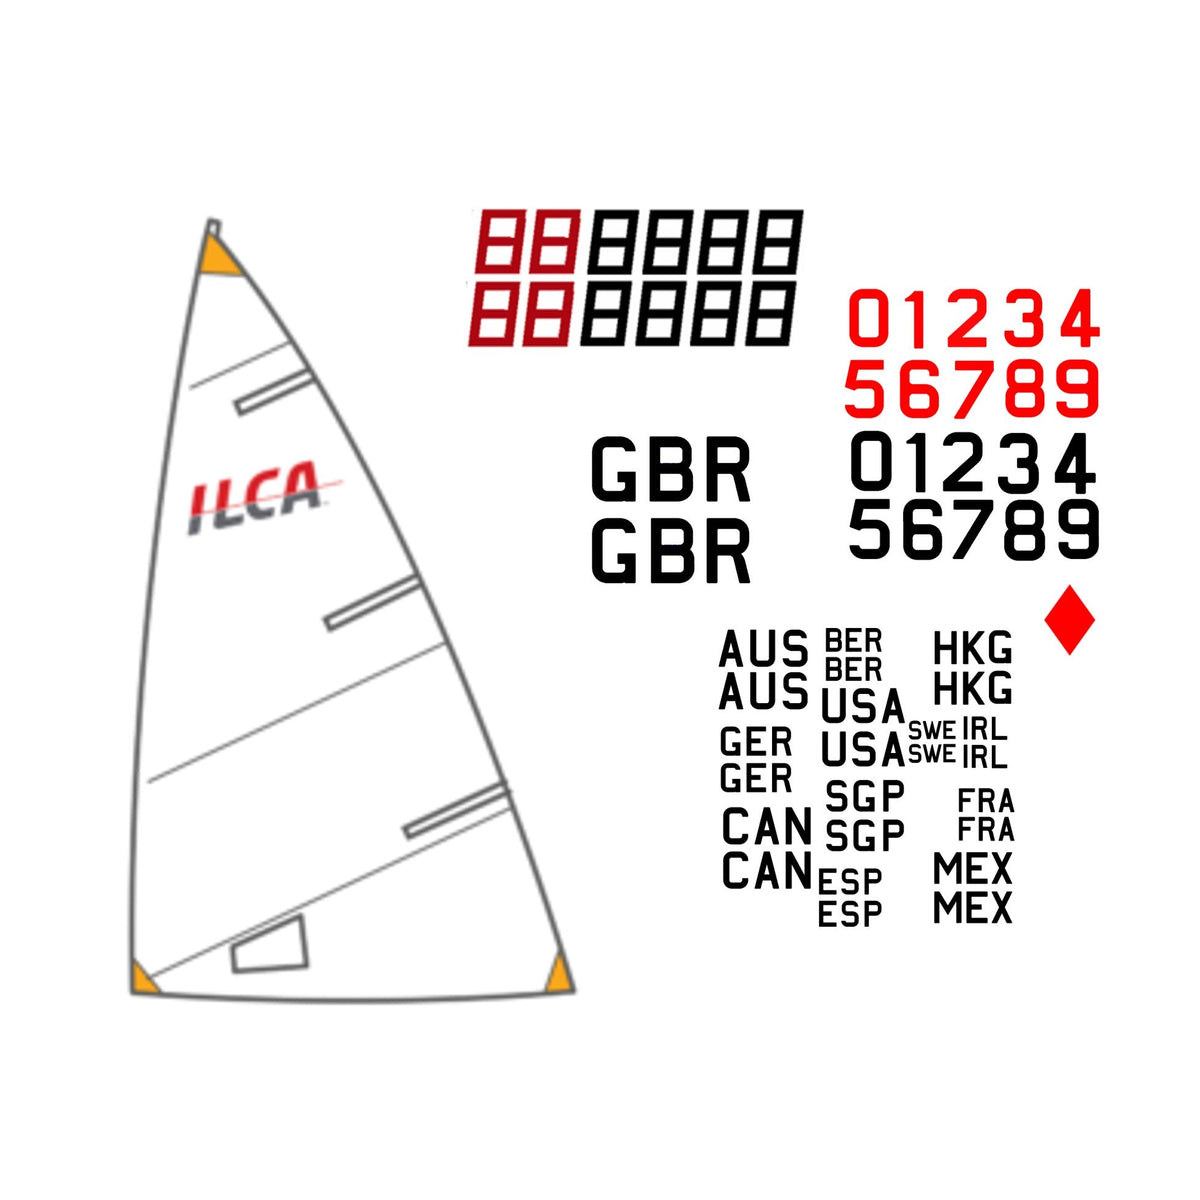 ILCA 4 Sail Bundle - Sail, Numbers, Country Code - Southeast Sailboats